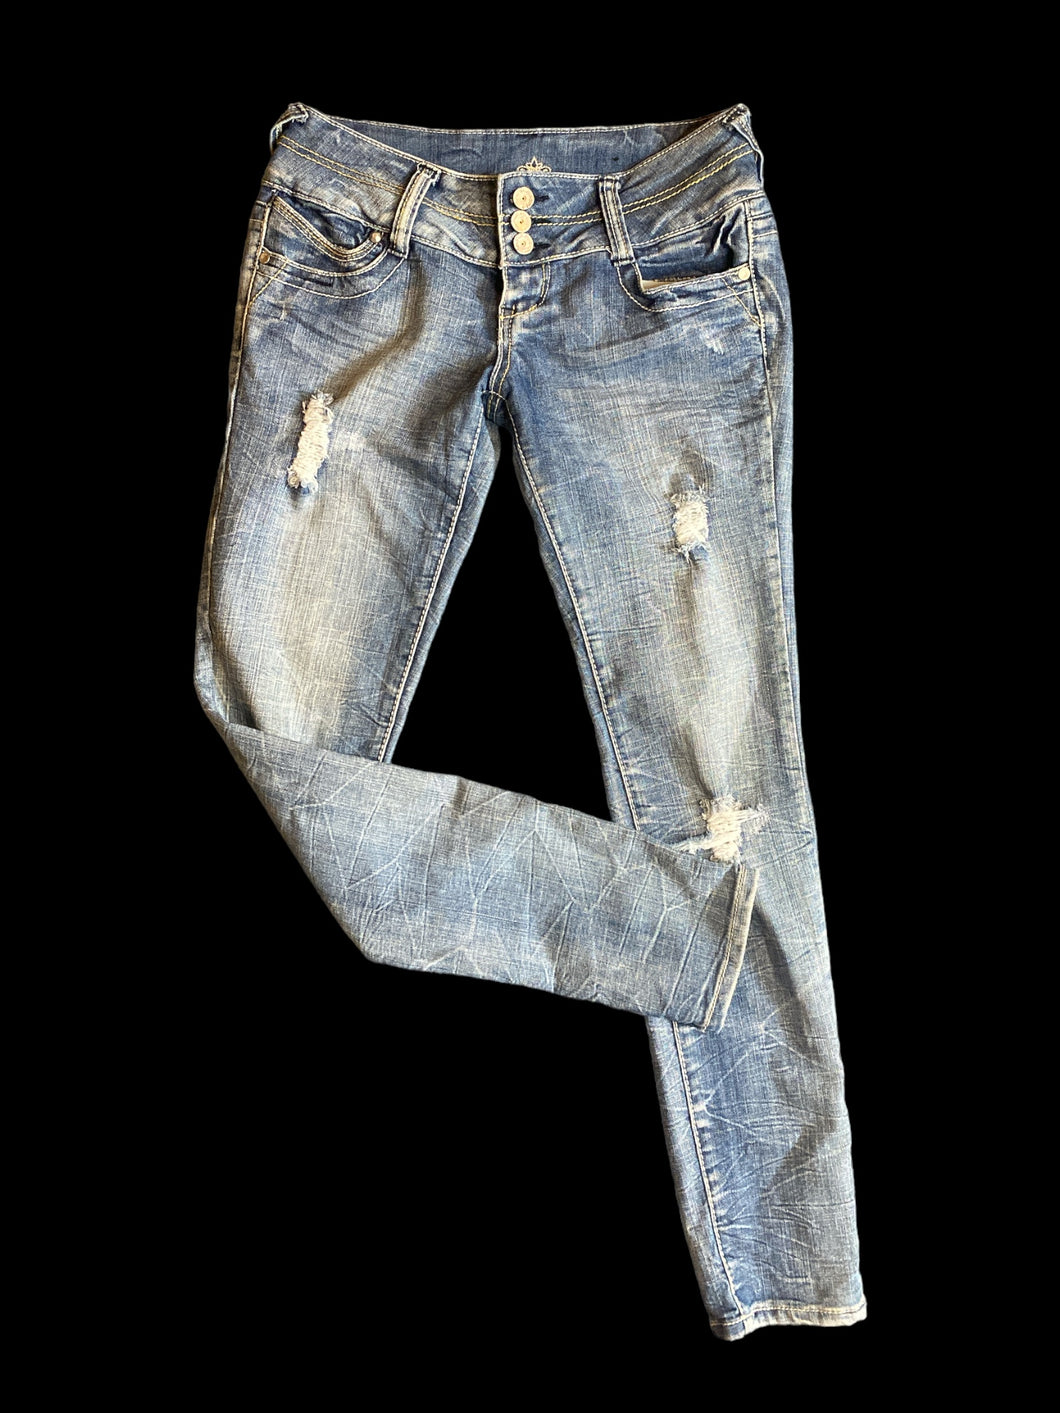 M Blue denim high-waisted distressed jeans w/ lightwash on legs, wide belt loops, pockets, gold & white stitching along waist, & zipper/3 button closure